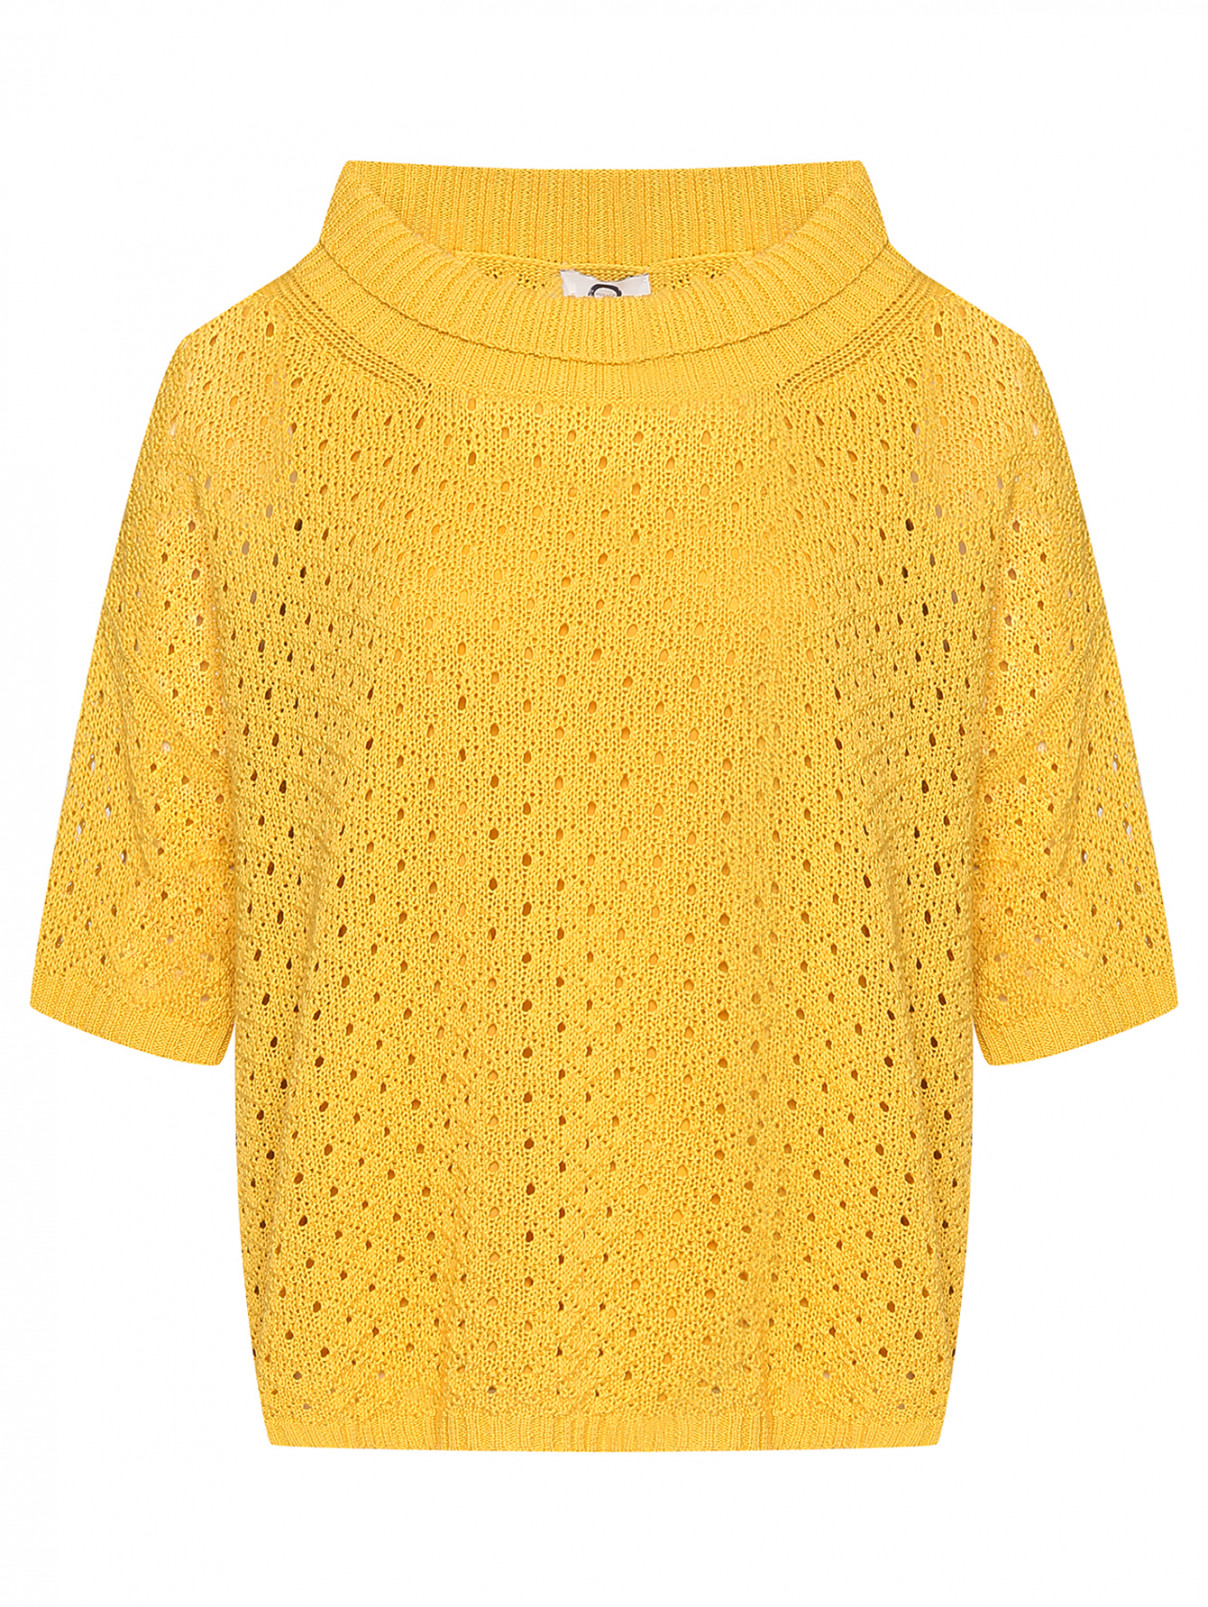 Джемпер из хлопка мелкой вязки Marina Rinaldi  –  Общий вид  – Цвет:  Желтый